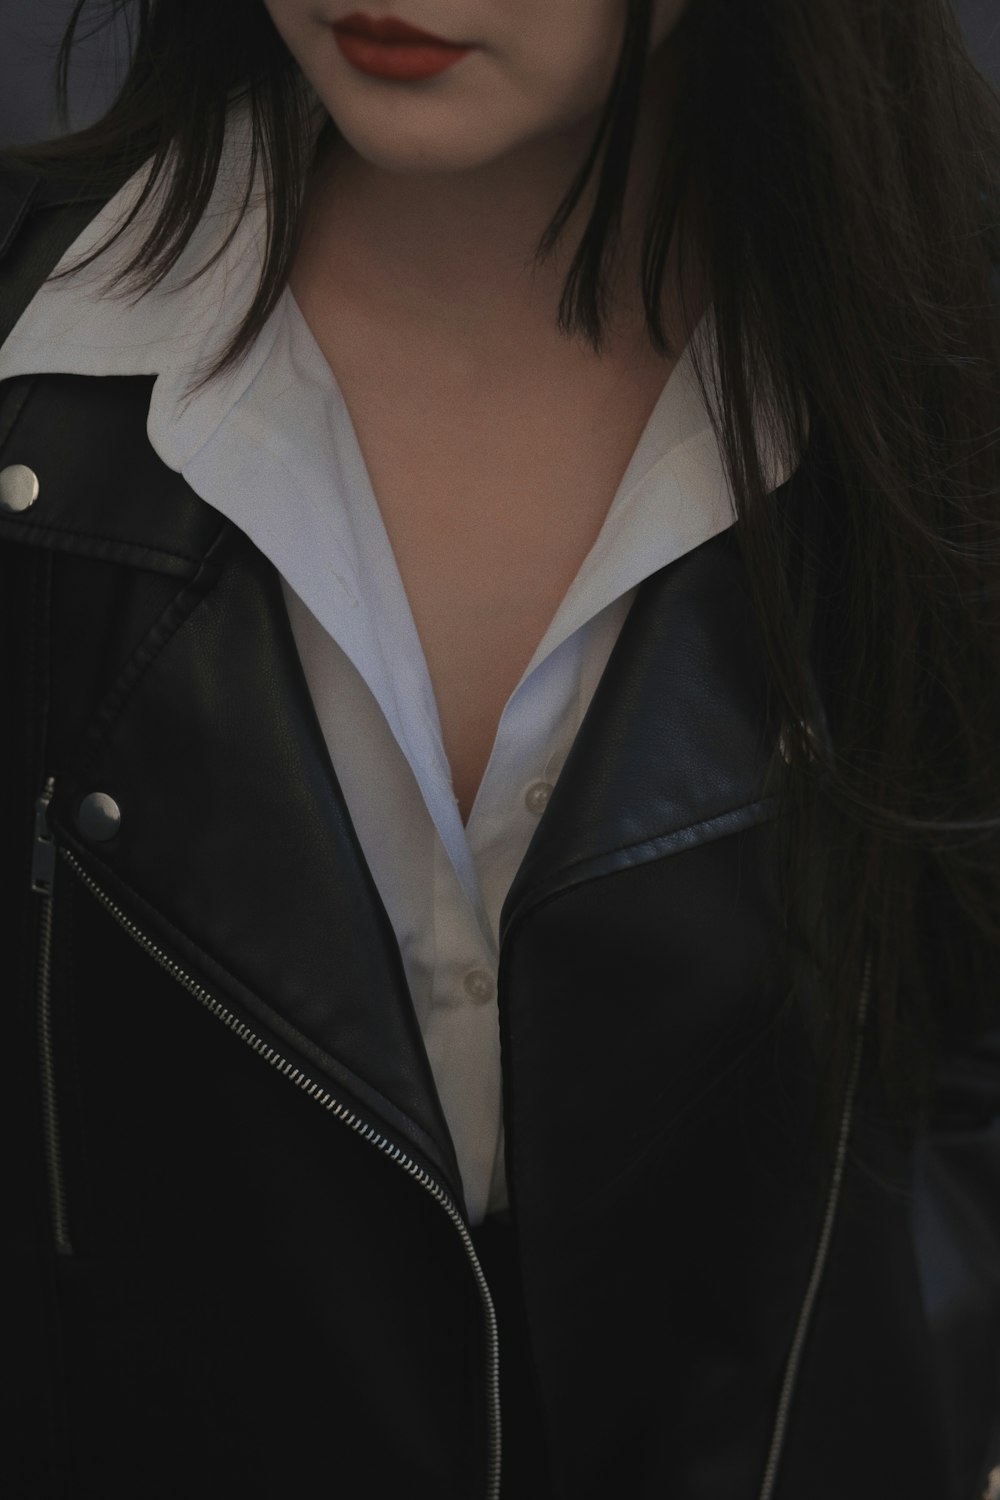 a woman wearing a black jacket